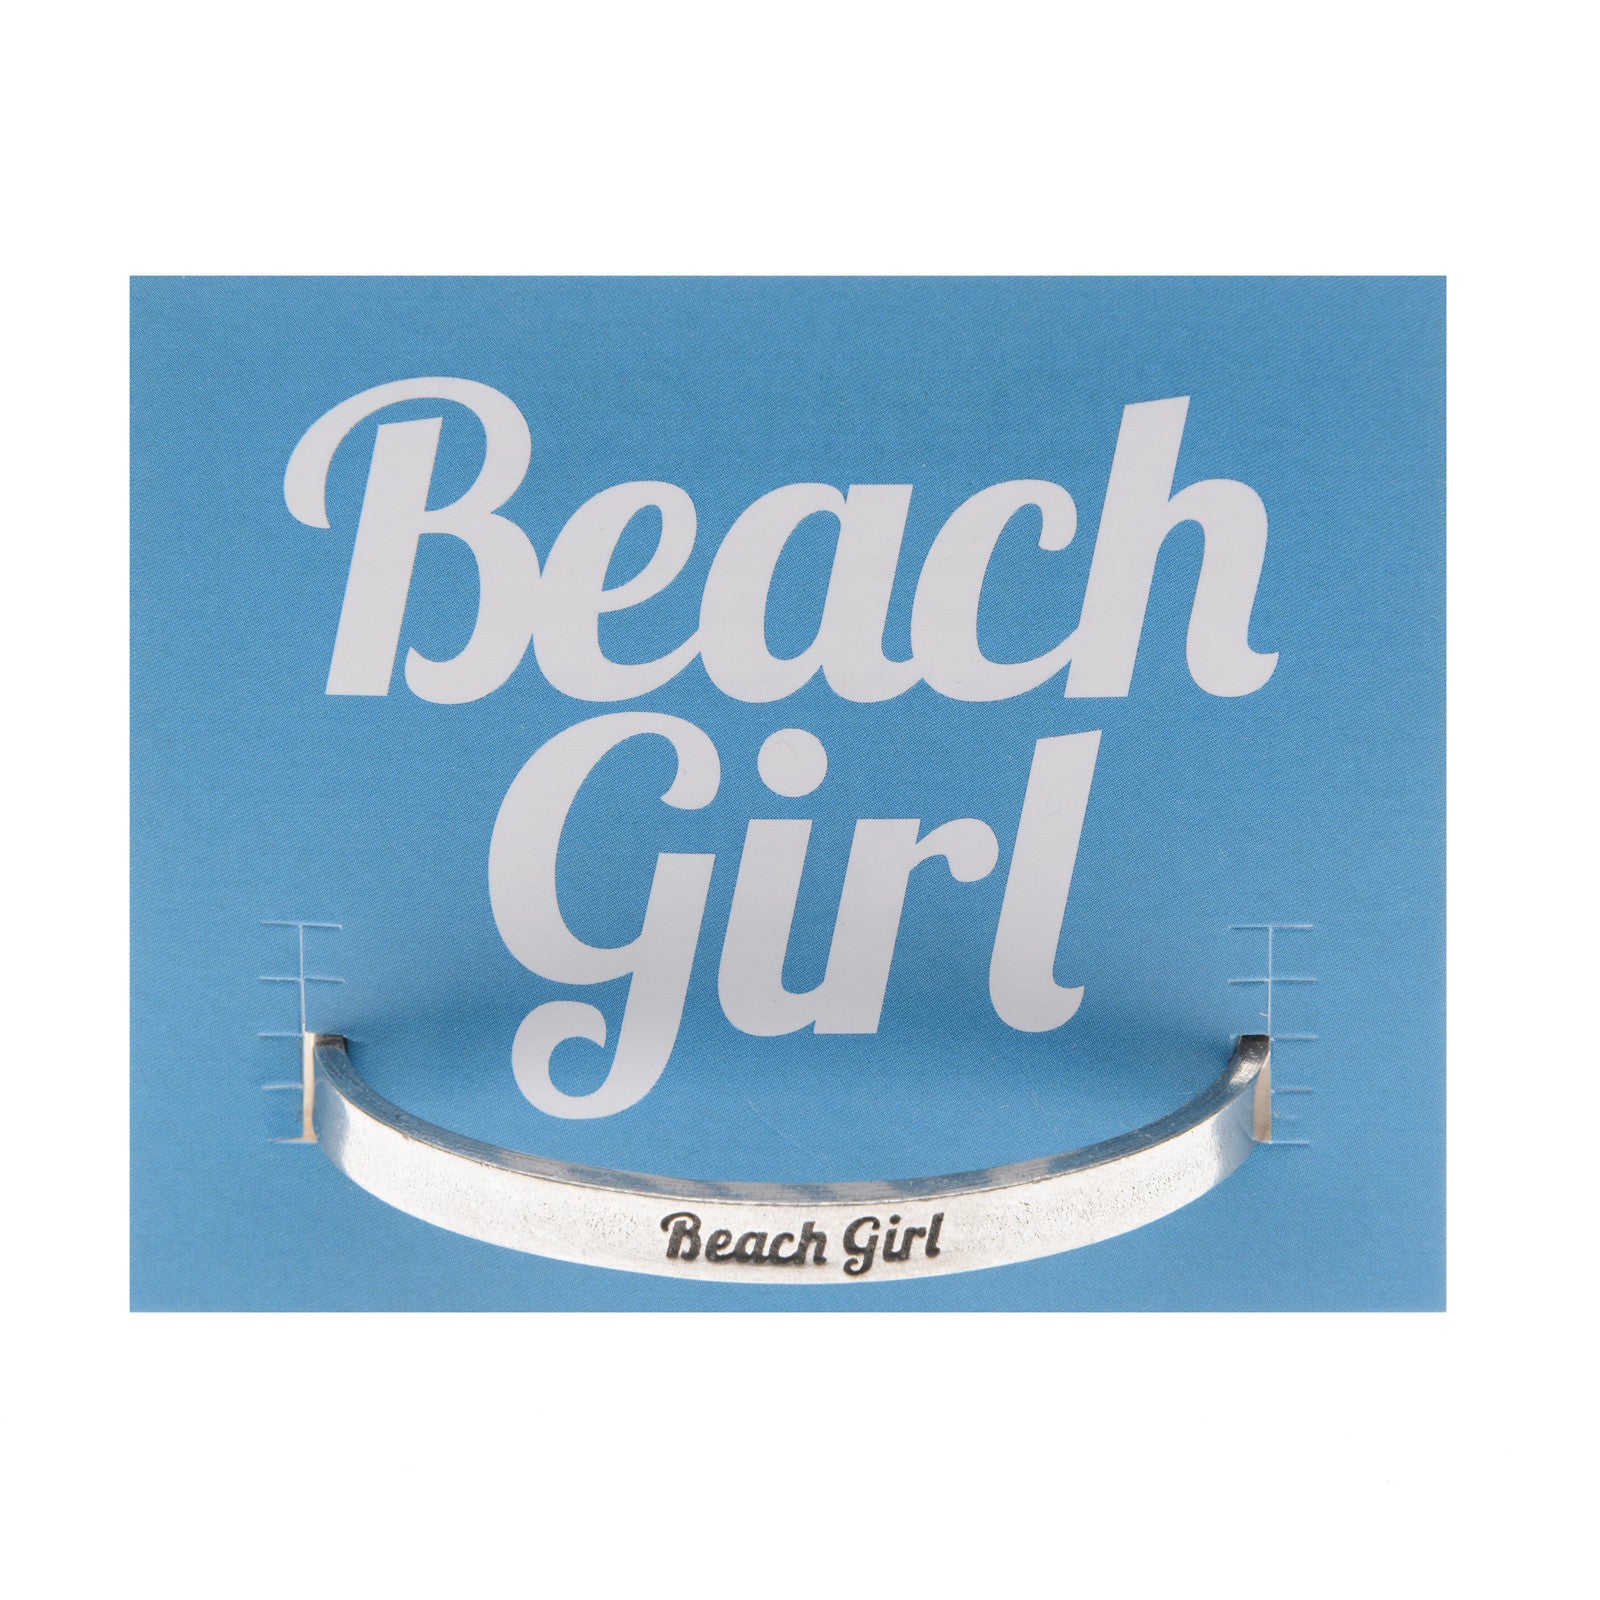 Beach Girl Quotable Cuff Bracelet on backer card